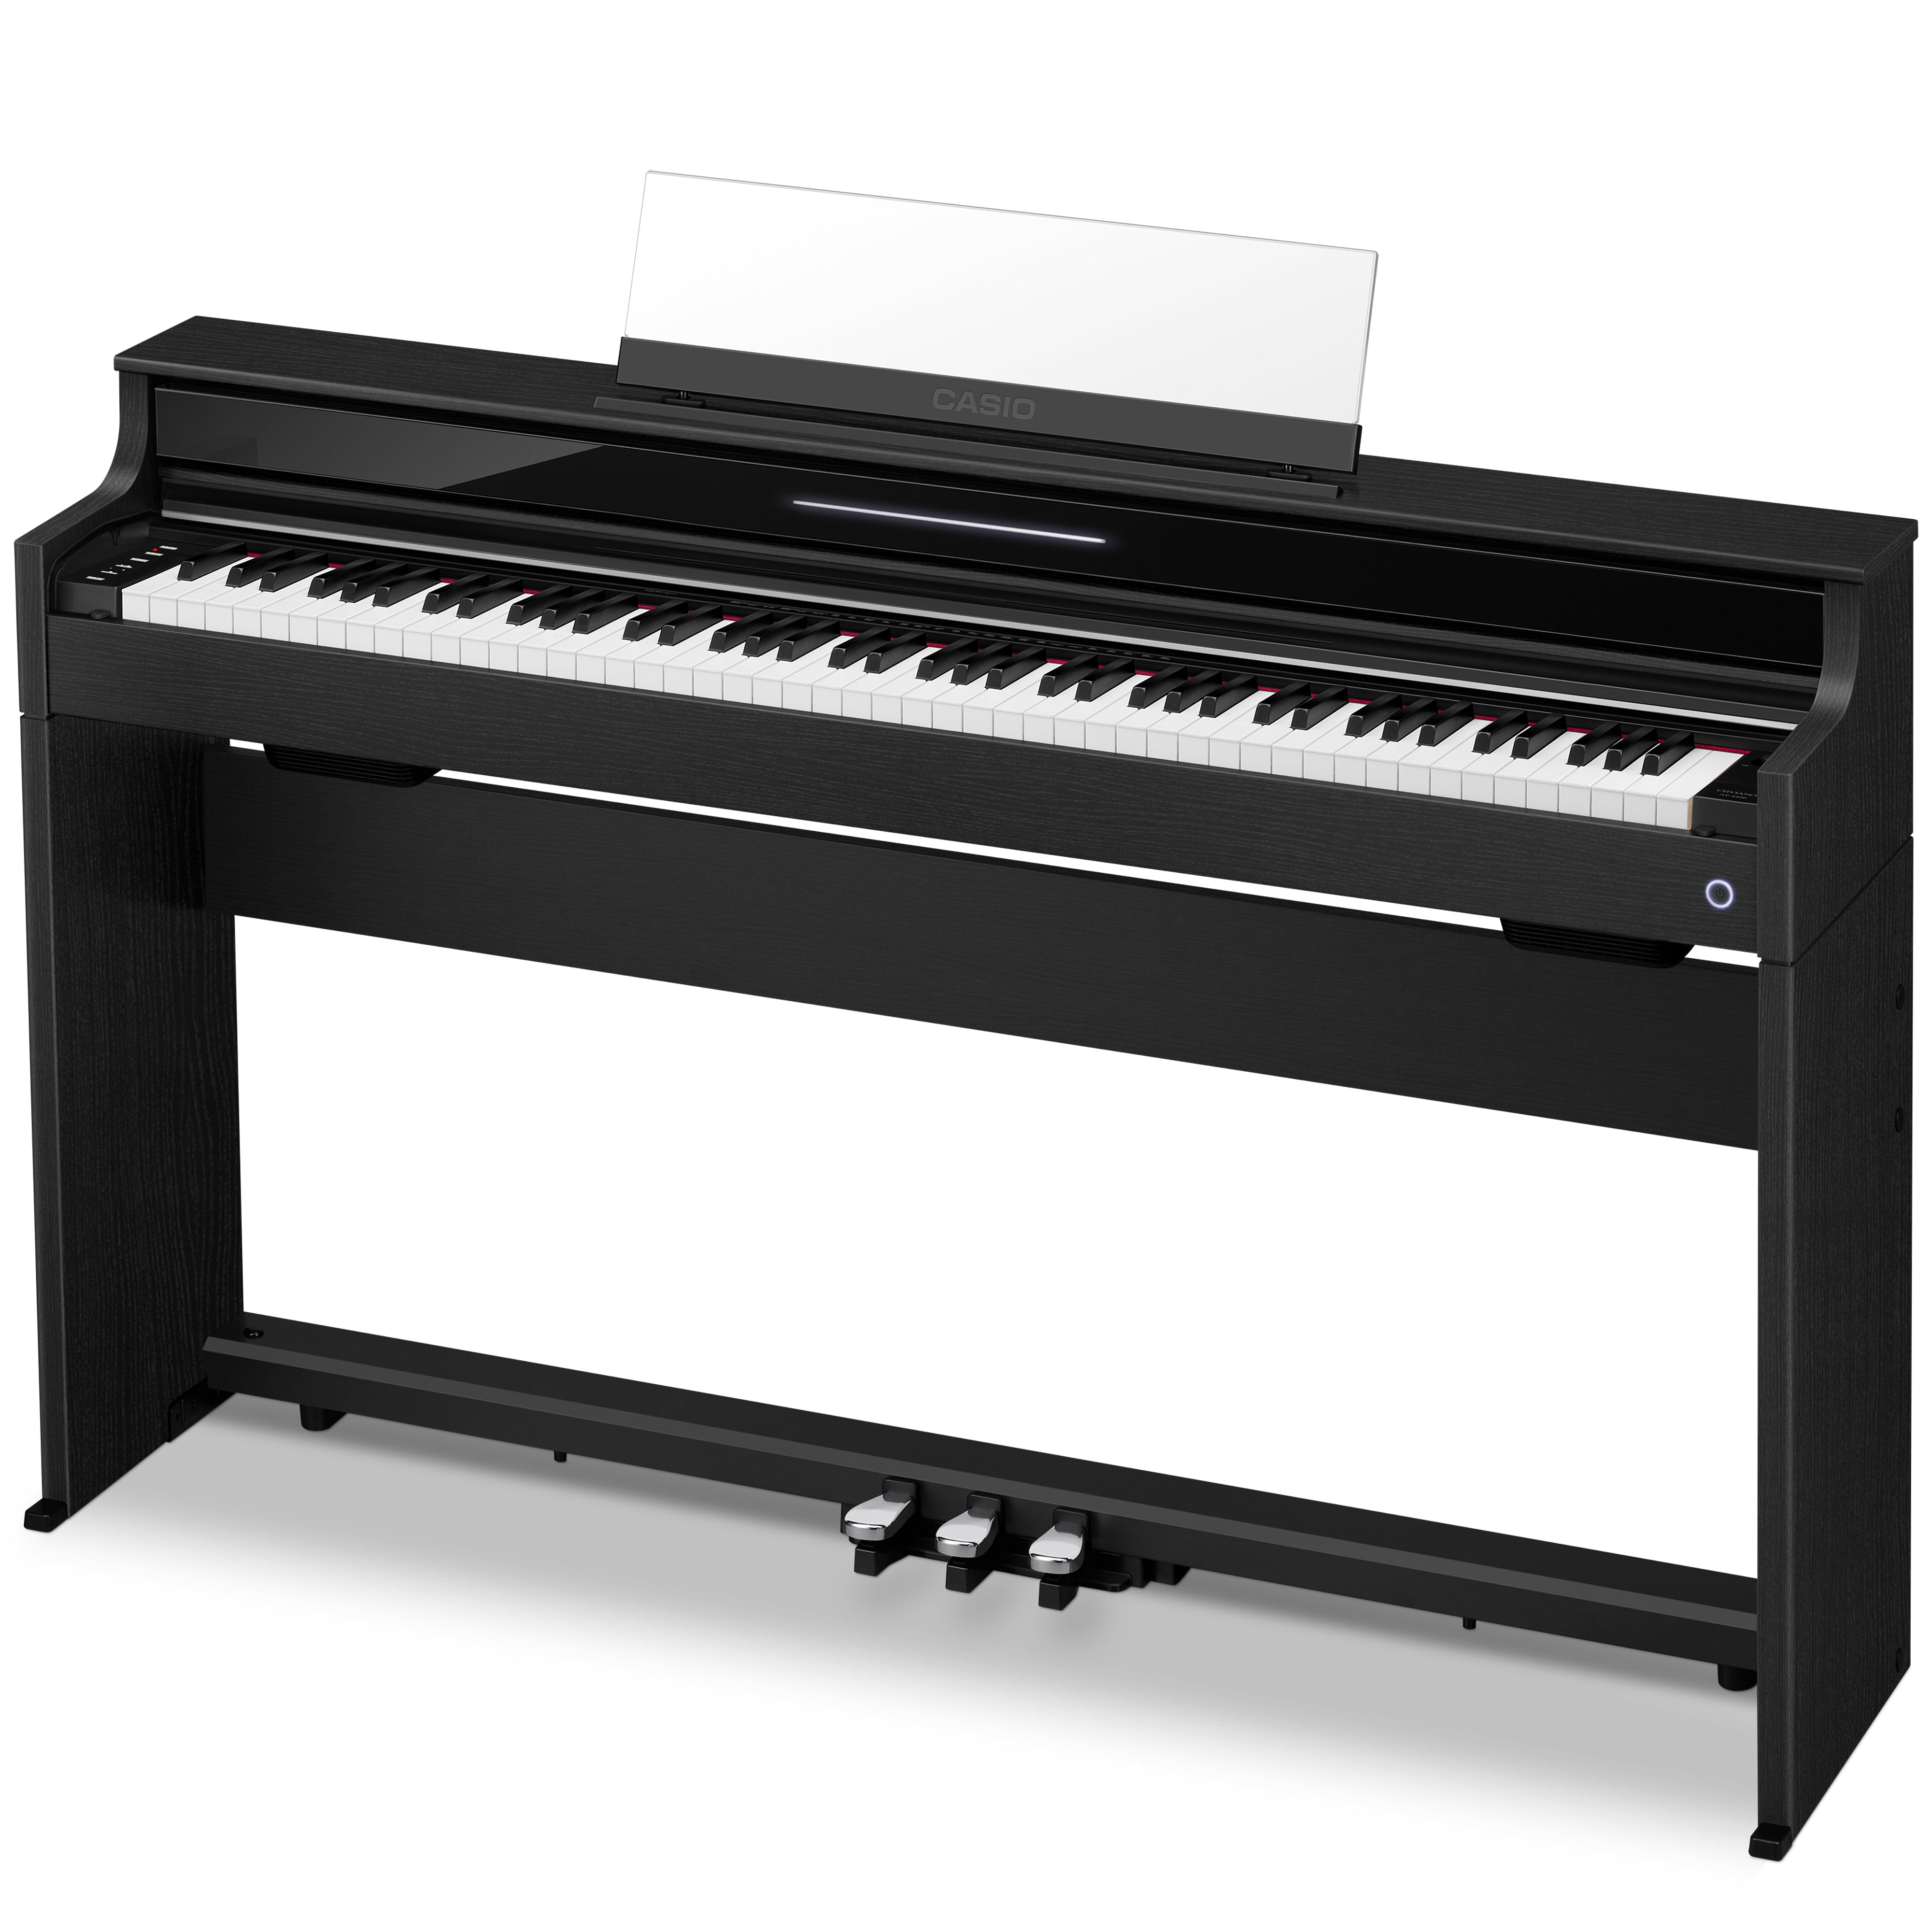 Casio Celviano AP-S450 Digital Piano - Black - facing left